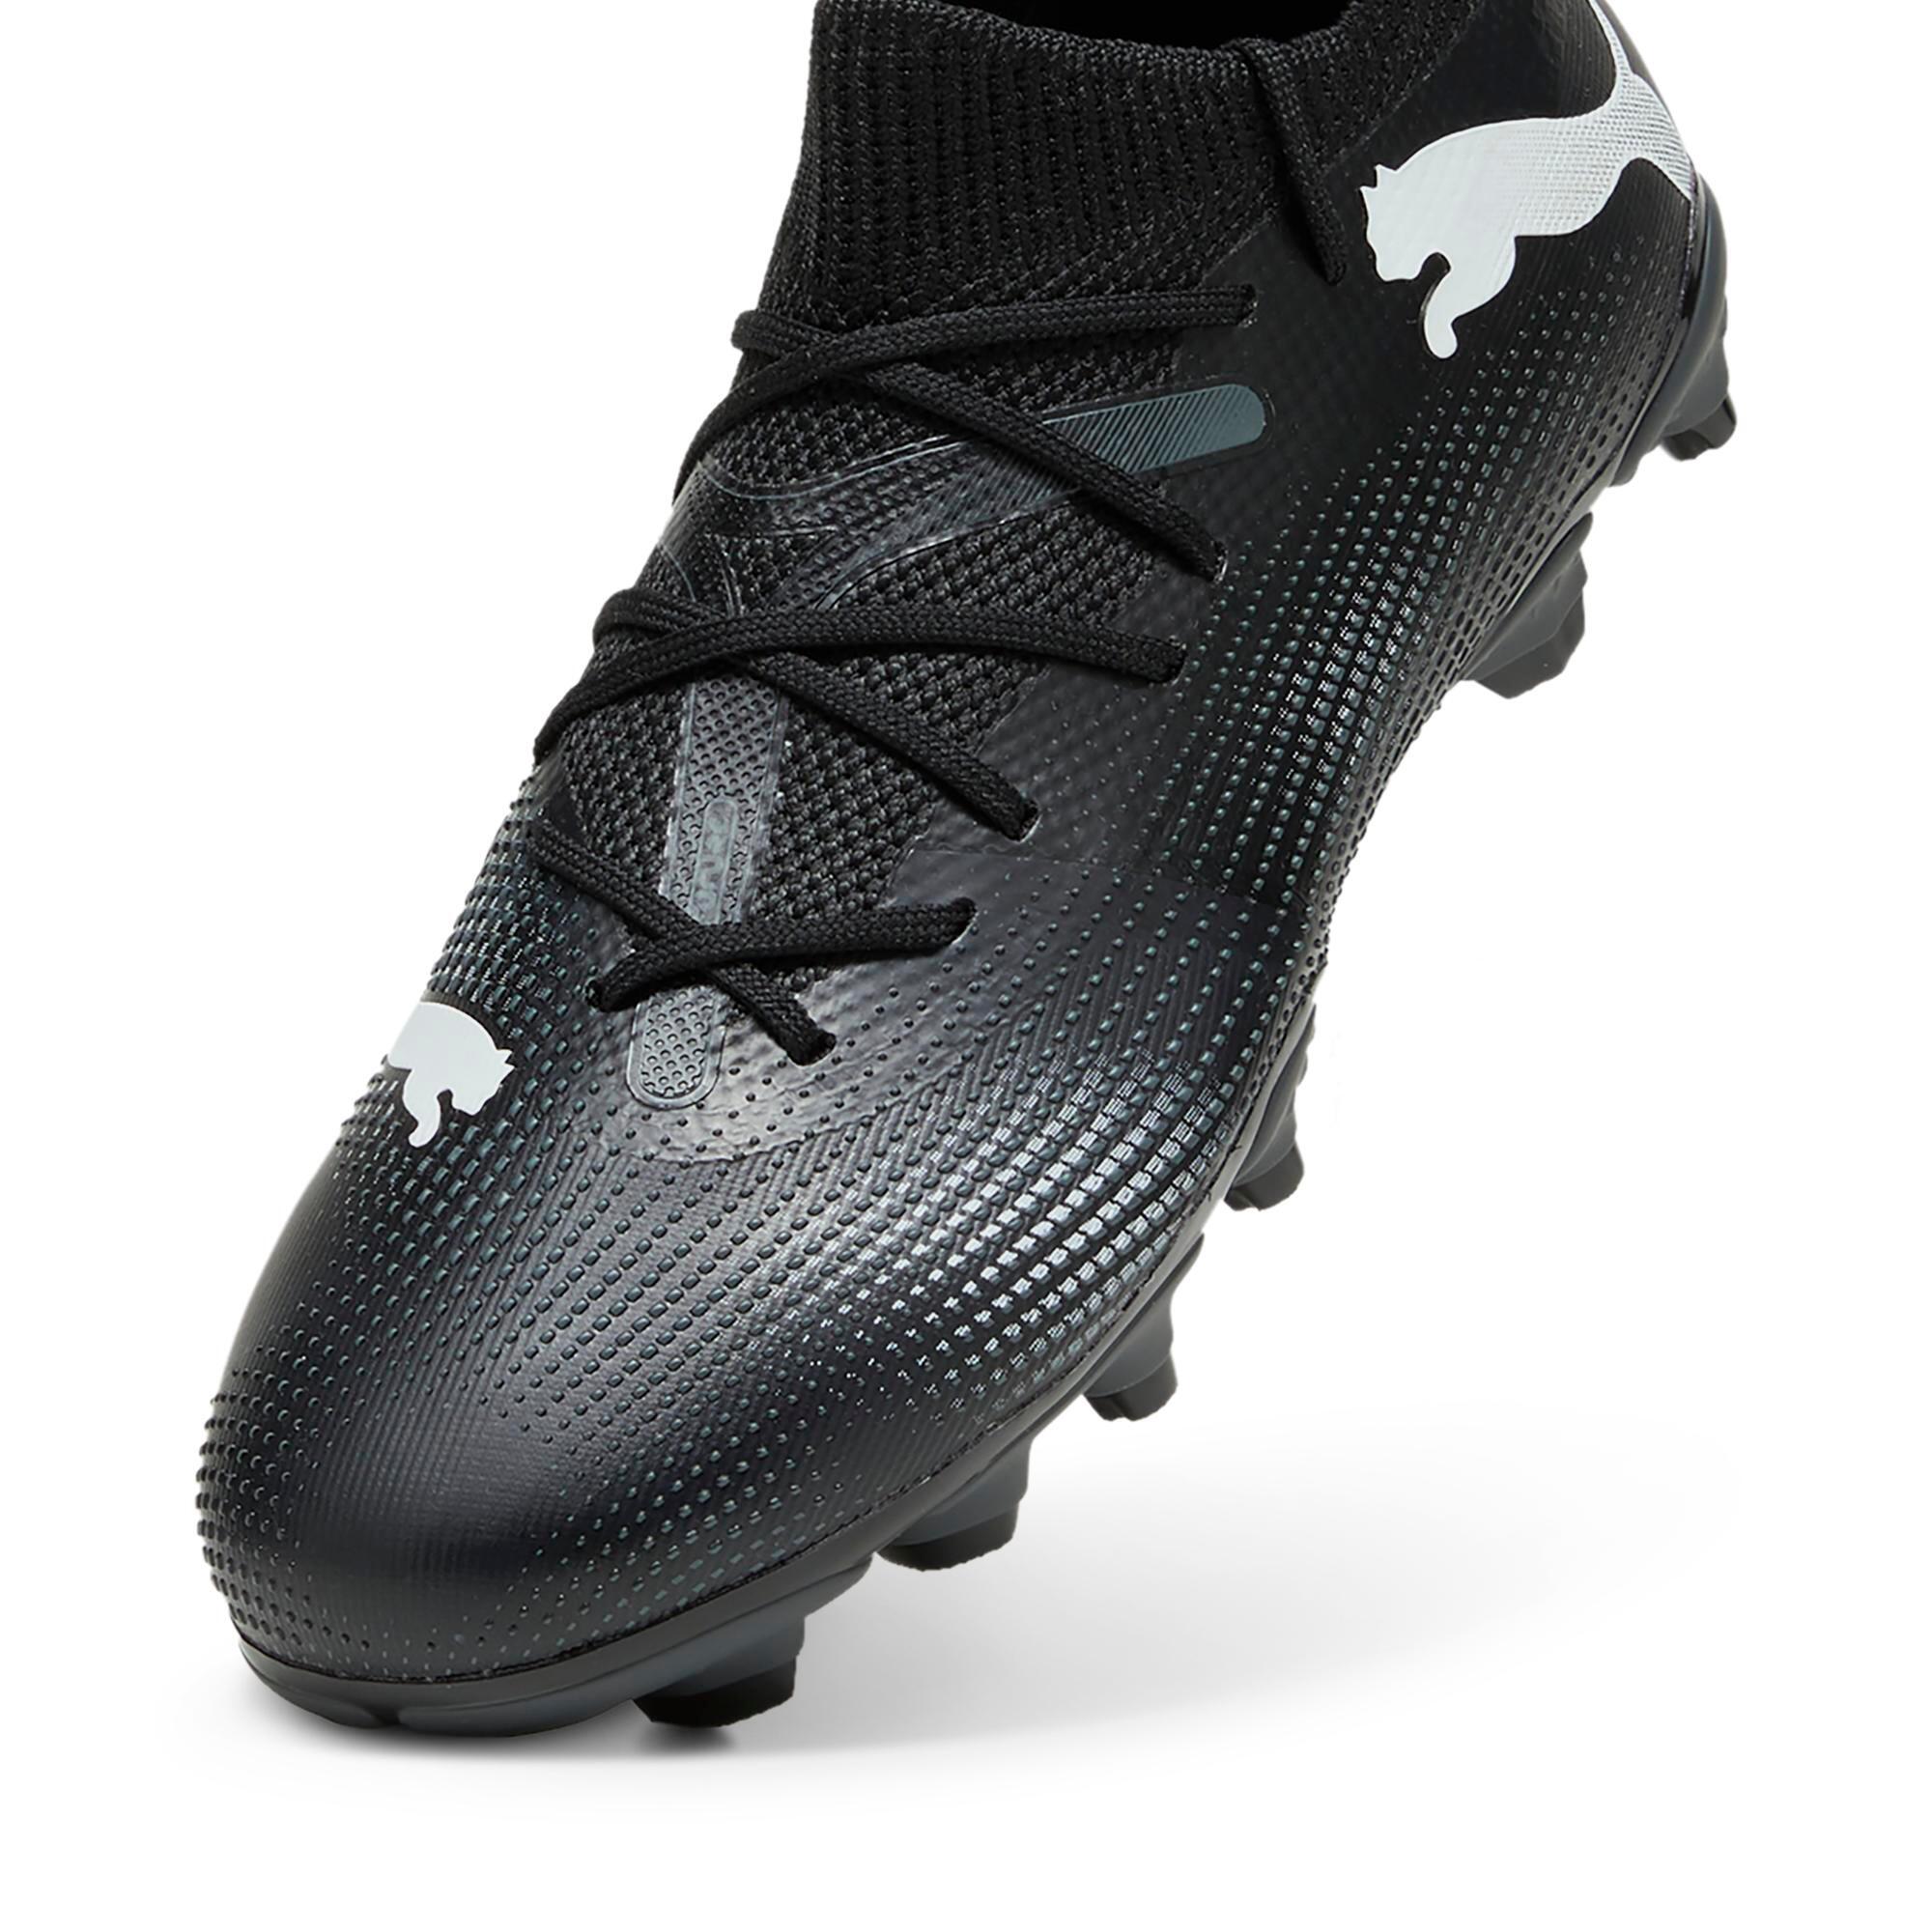 Kids' Football Boots Future FG - Black 3/5